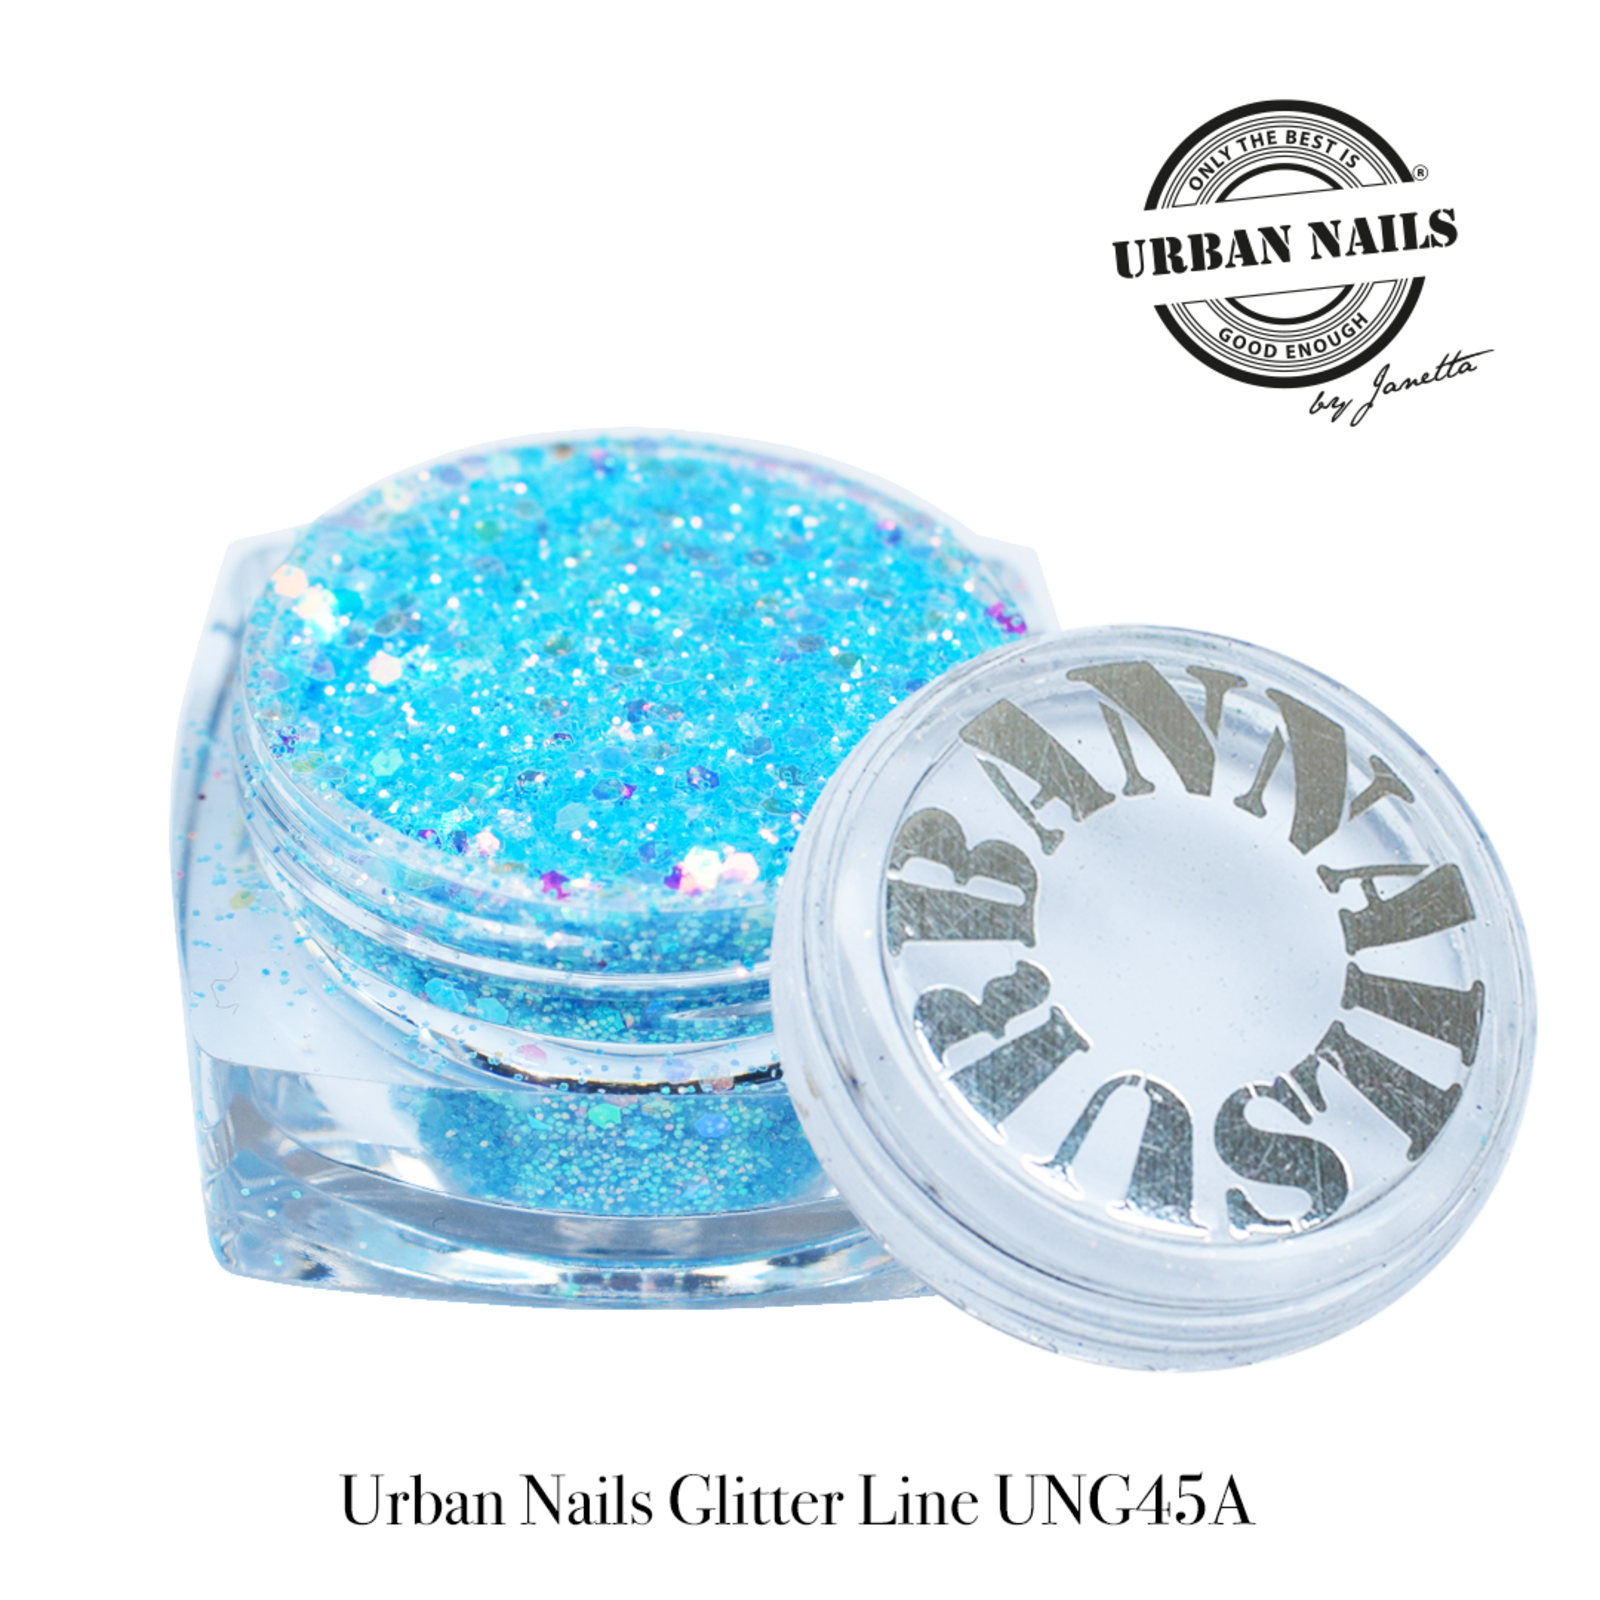 Urban nails Glitter Line UNG45-A